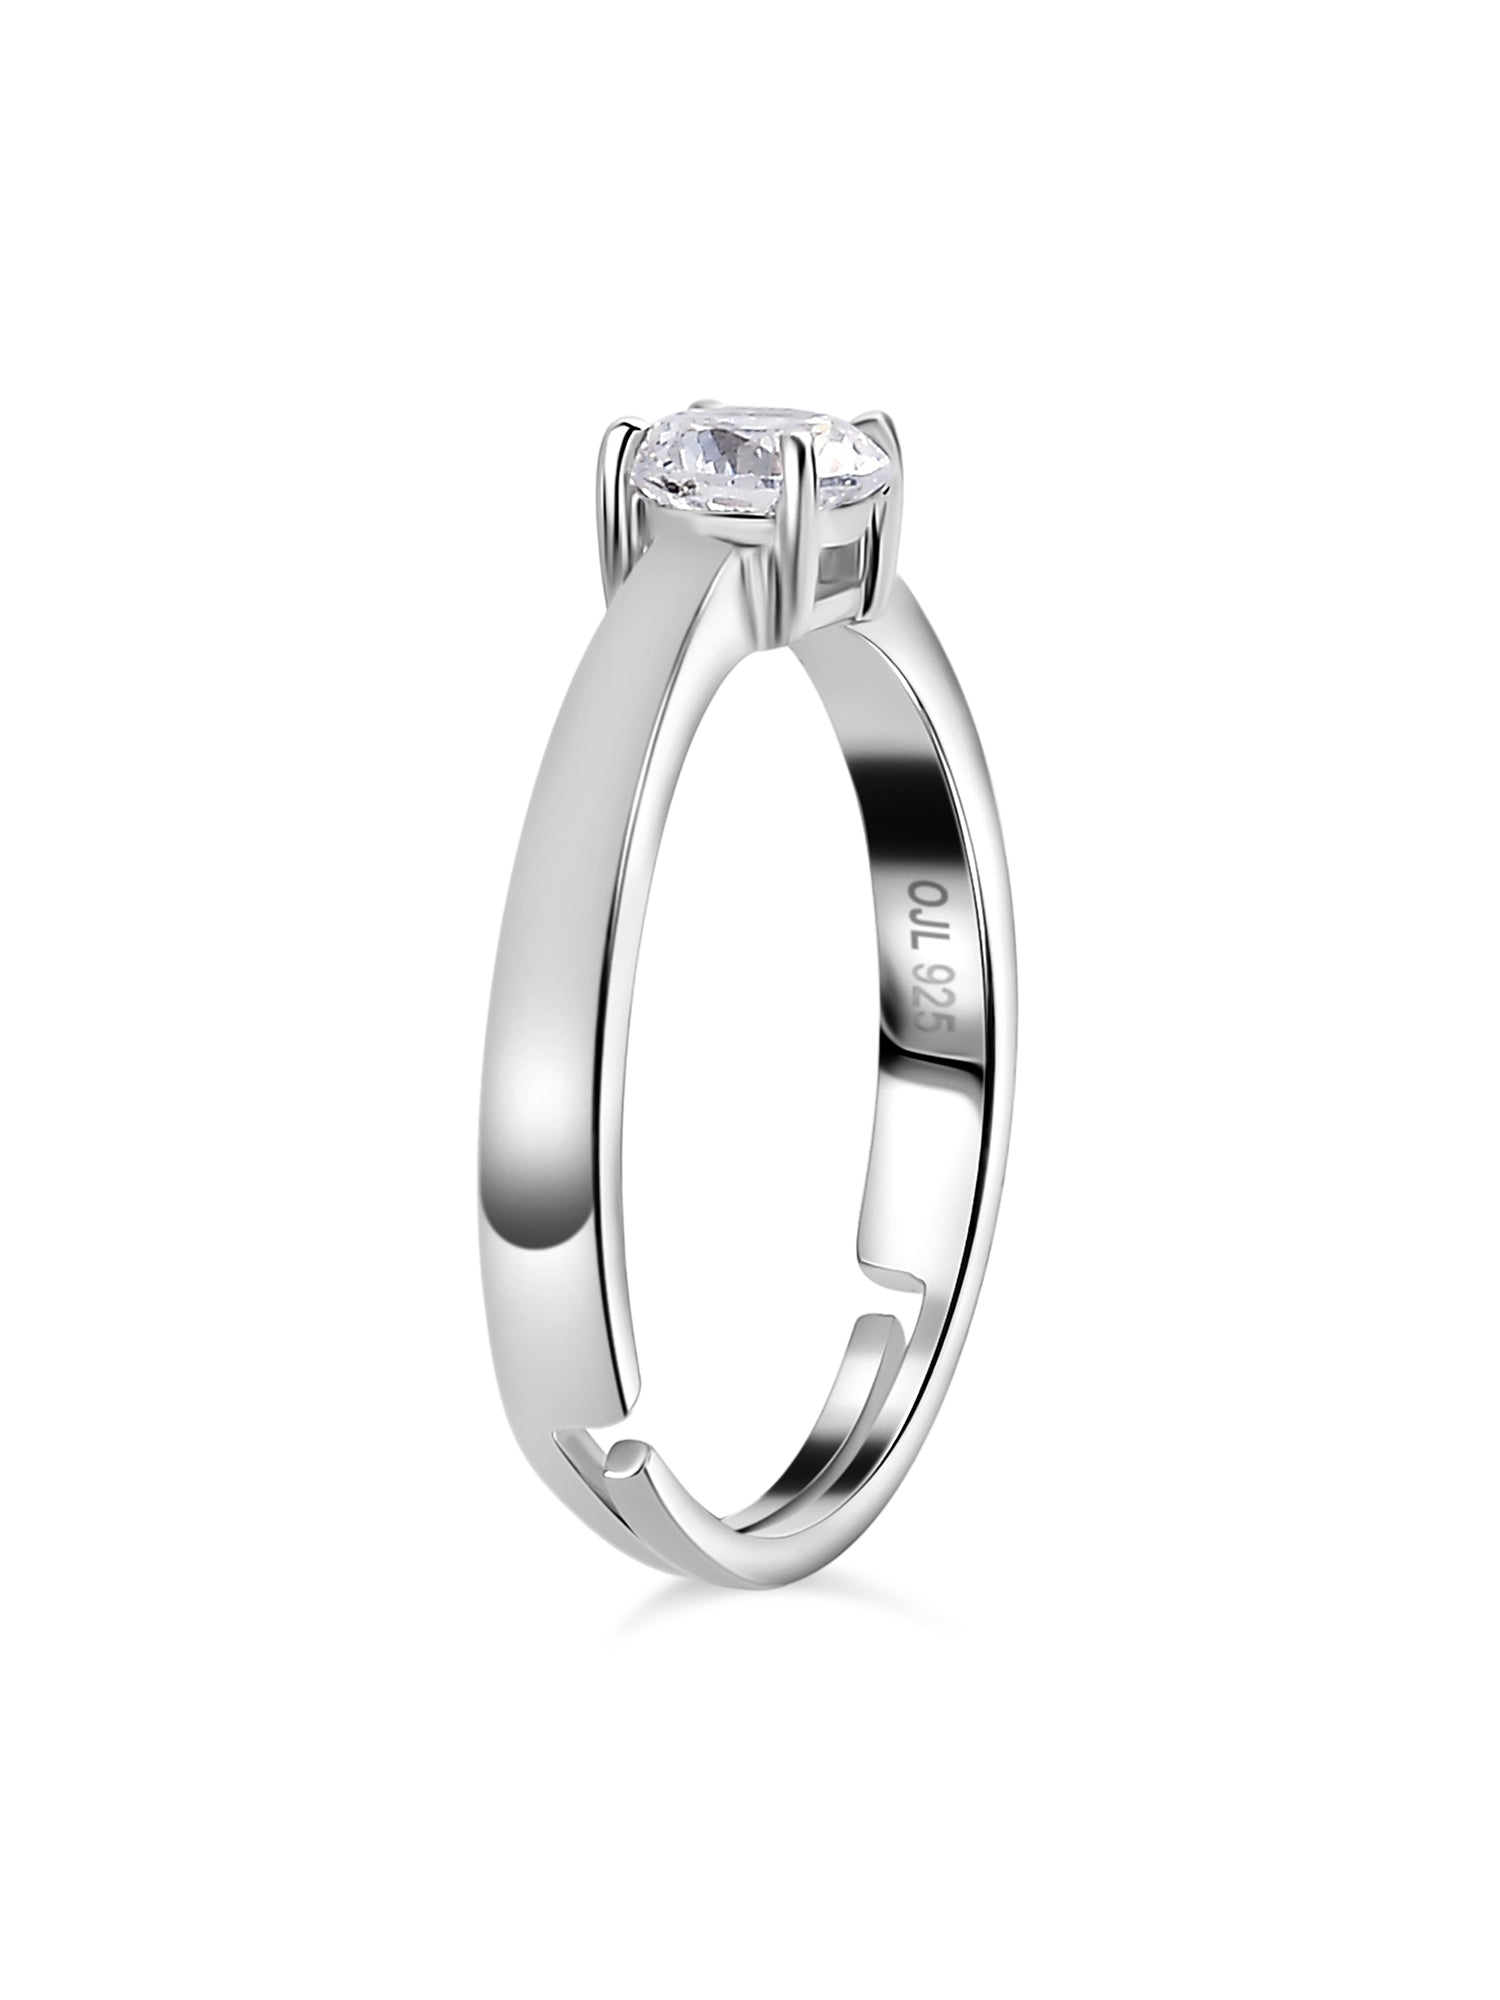 Ornate Jewels 0.8 Carat American Diamond Solitaire Adjustable Ring